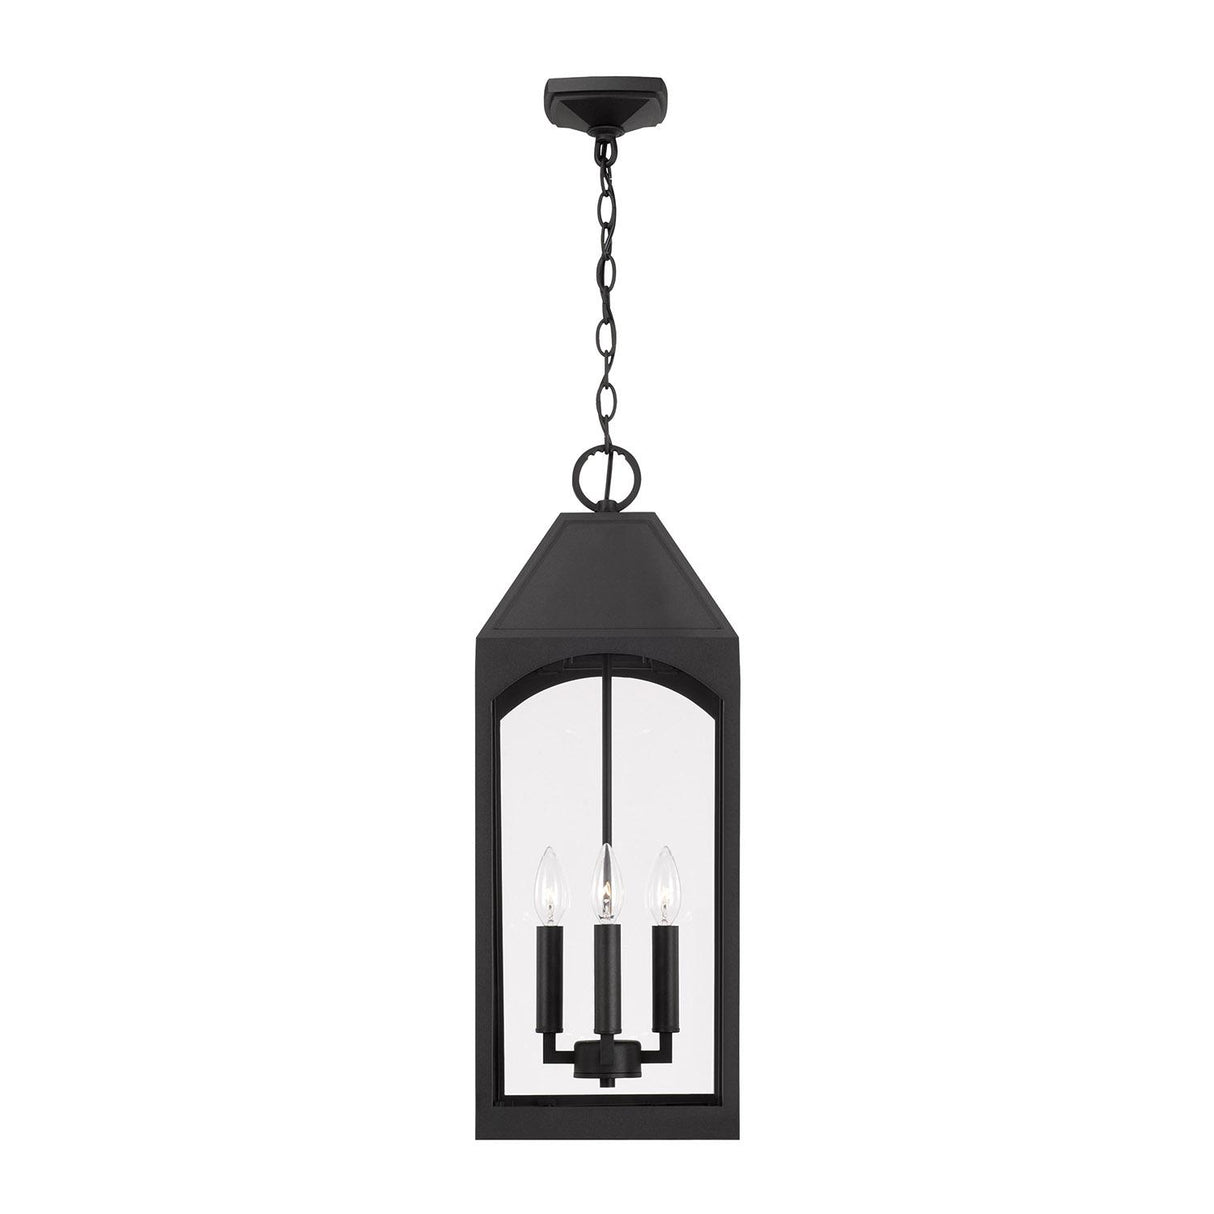 Capital Lighting 946342BK Burton 4 Light Outdoor Hanging Lantern Black